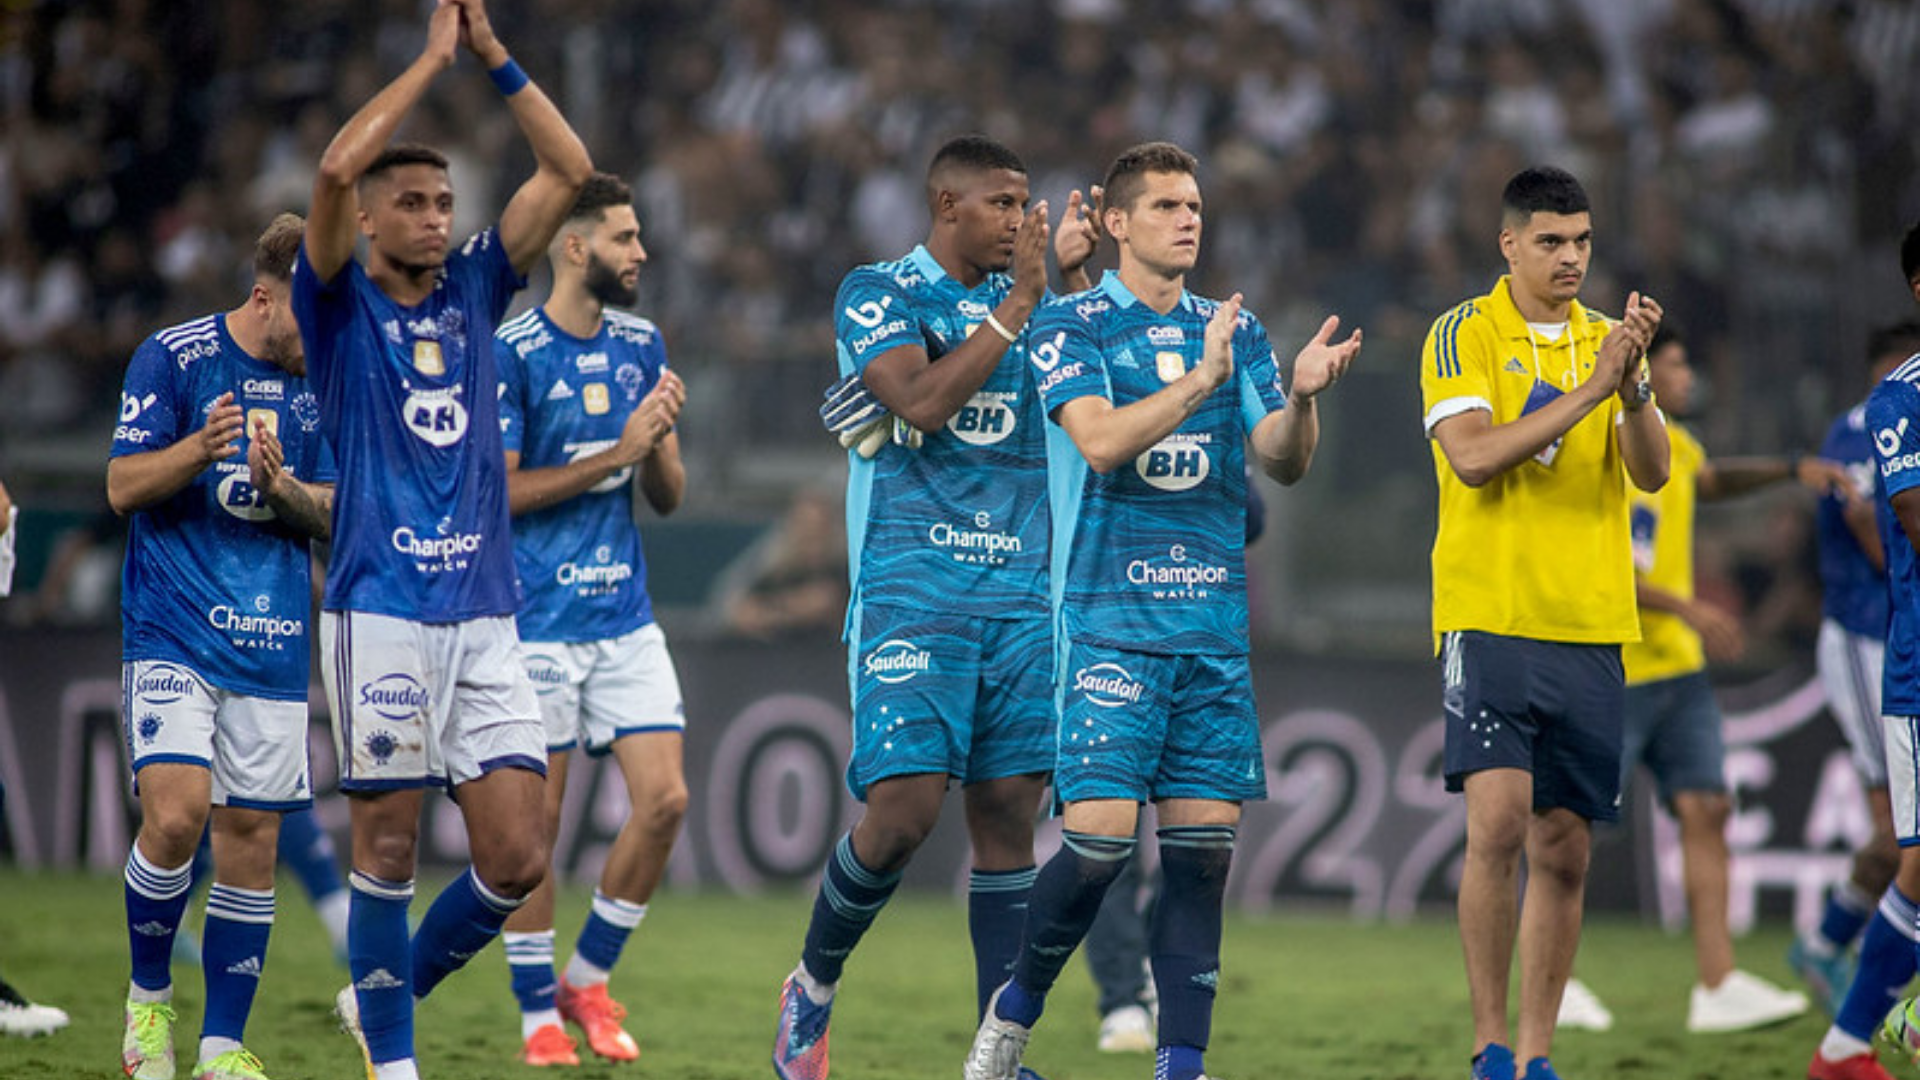 Elenco do Cruzeiro agradece torcida